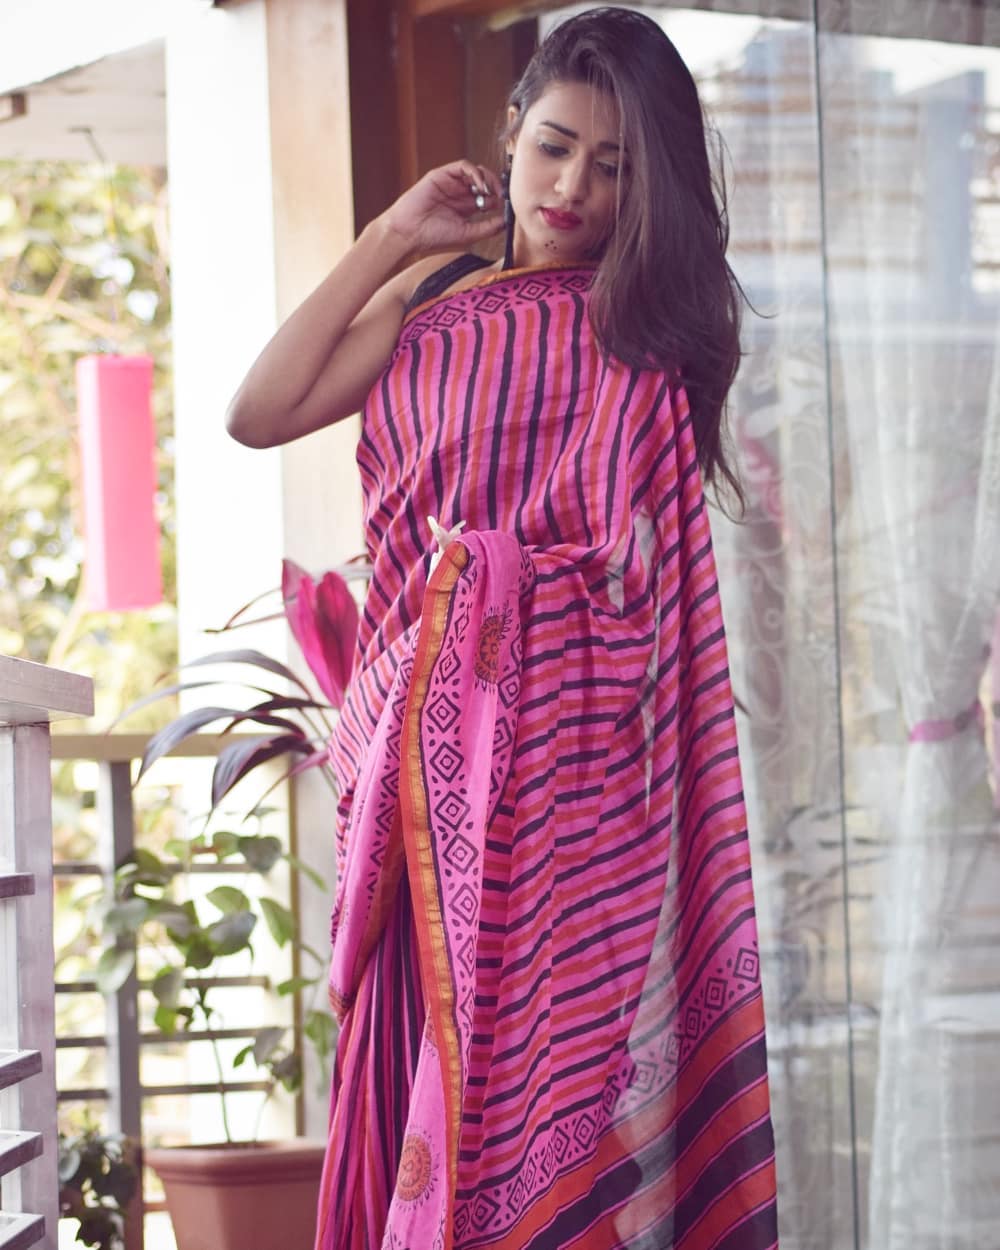 Gima Ashi in Pink Saree Photos | Garima Chaurasia Photos - shoutoutly